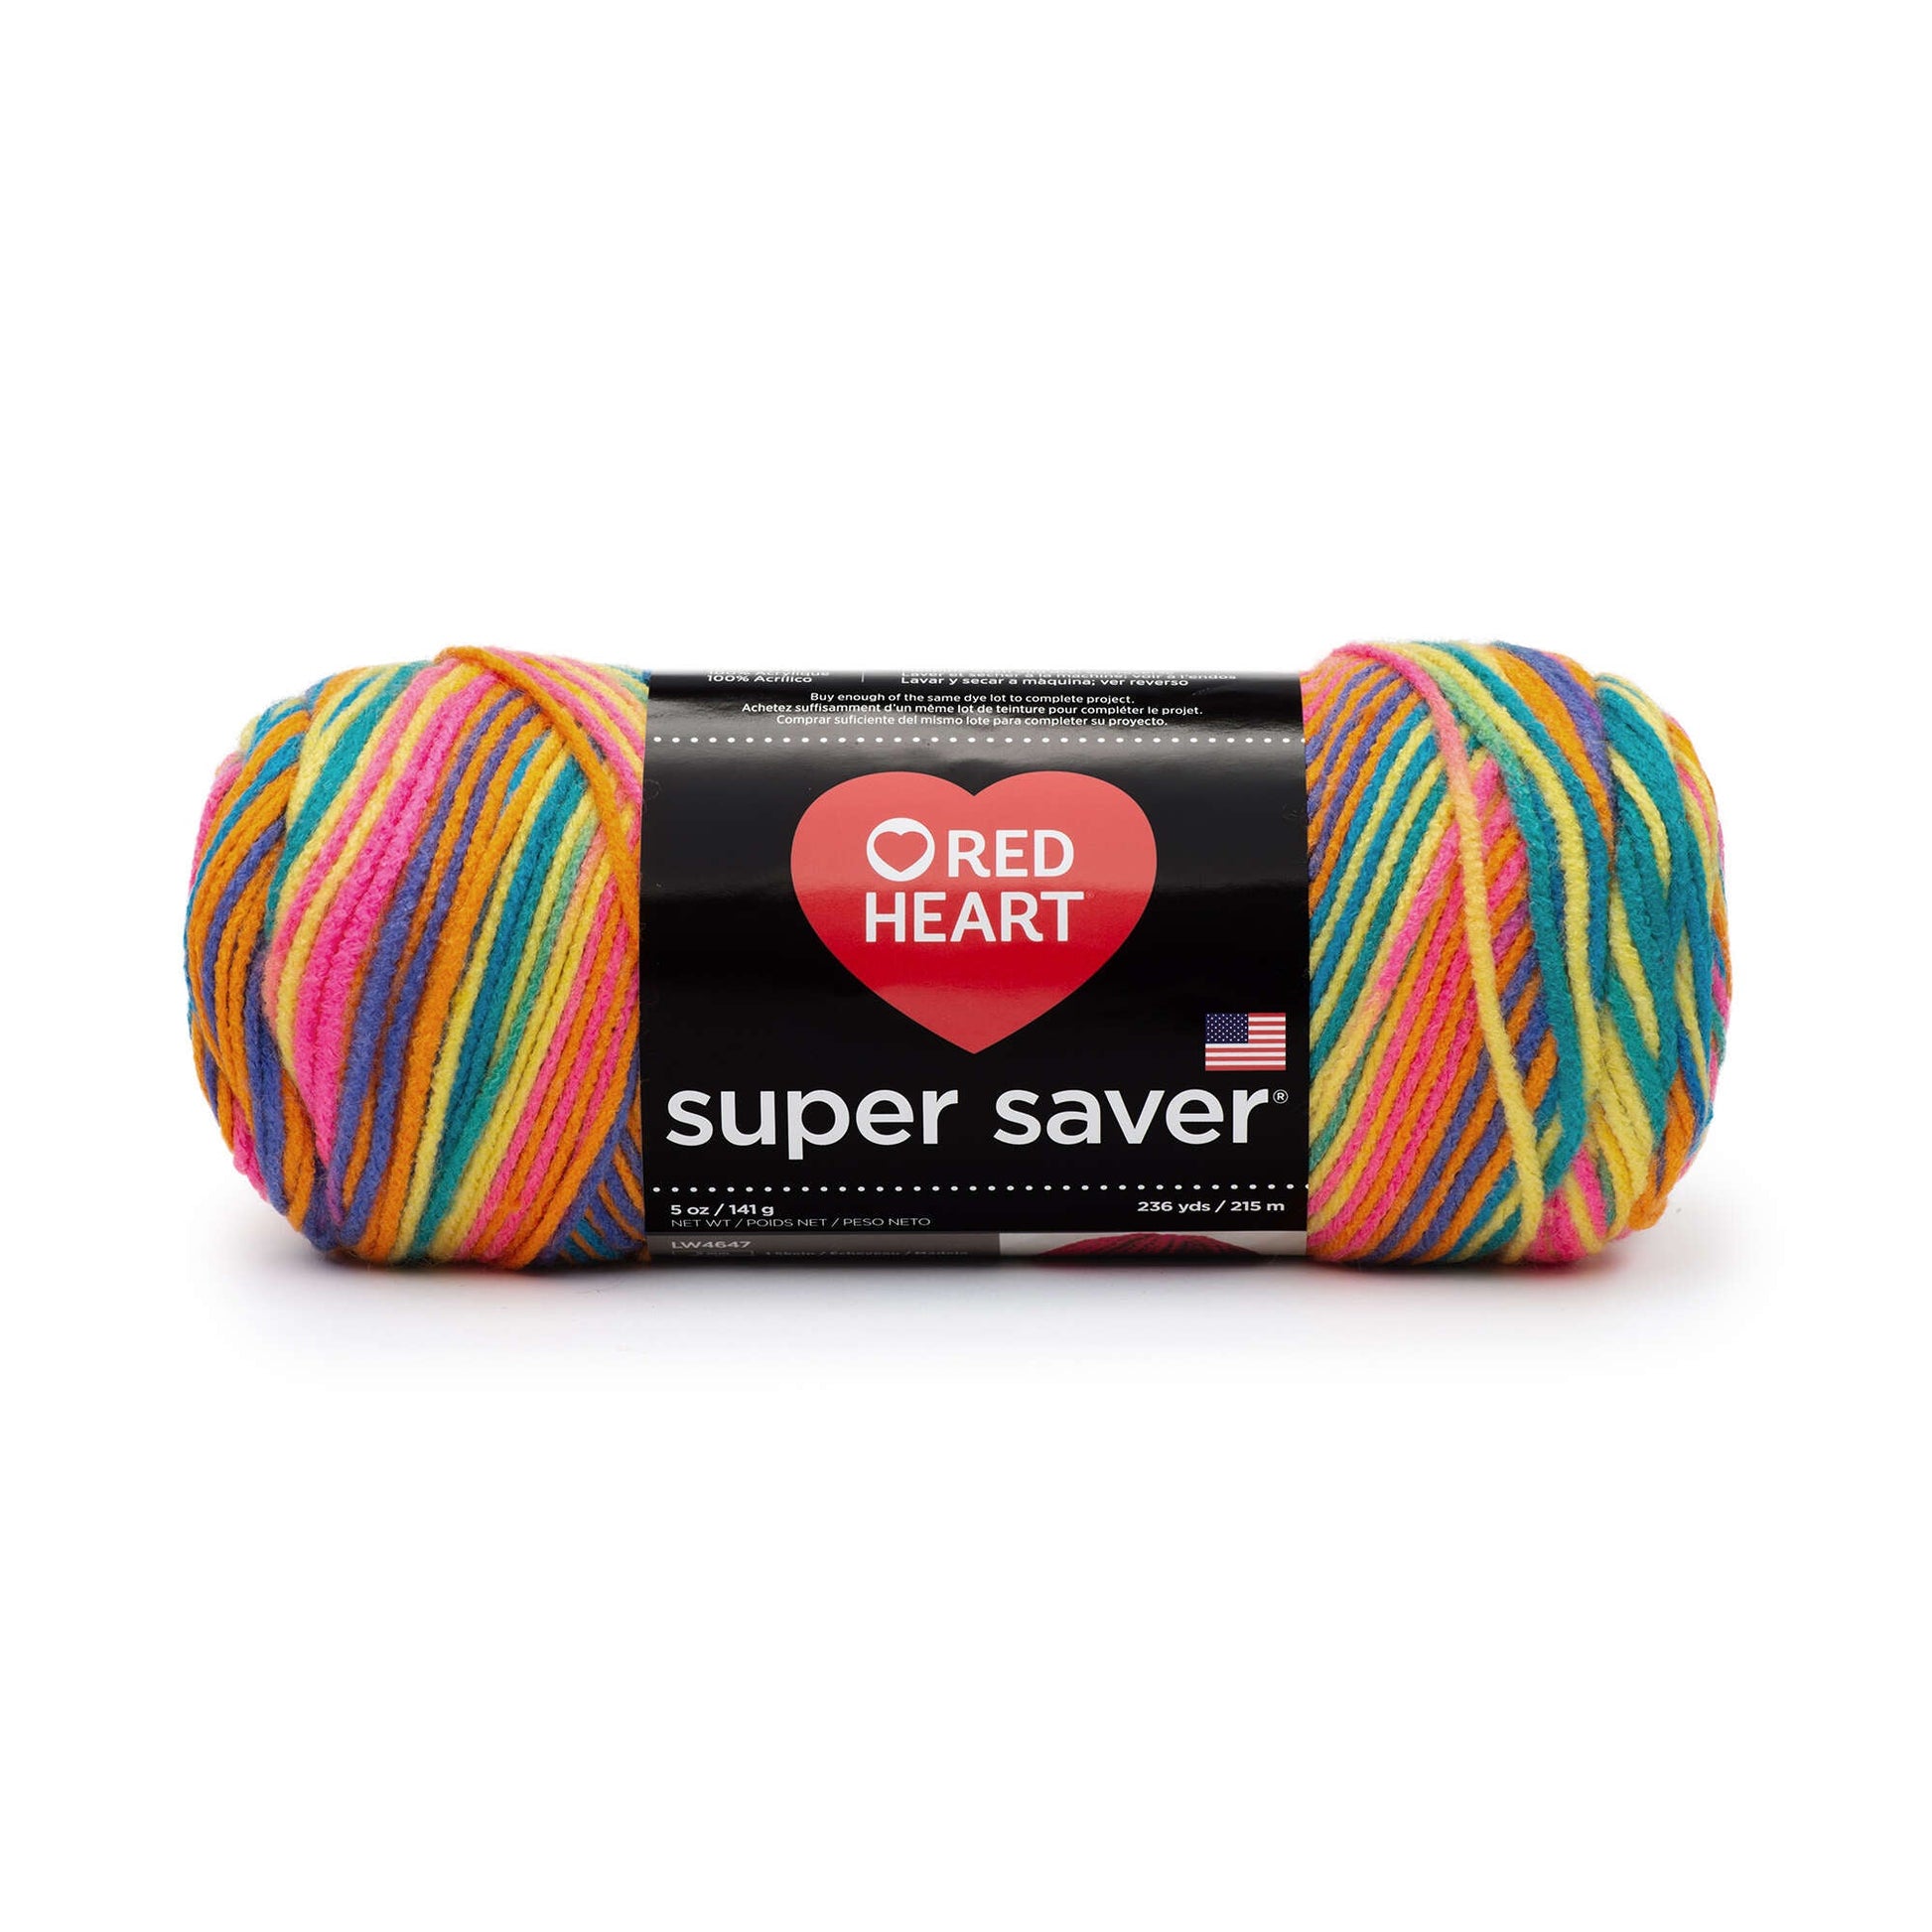 Red Heart Super Saver Yarn - Discontinued shades